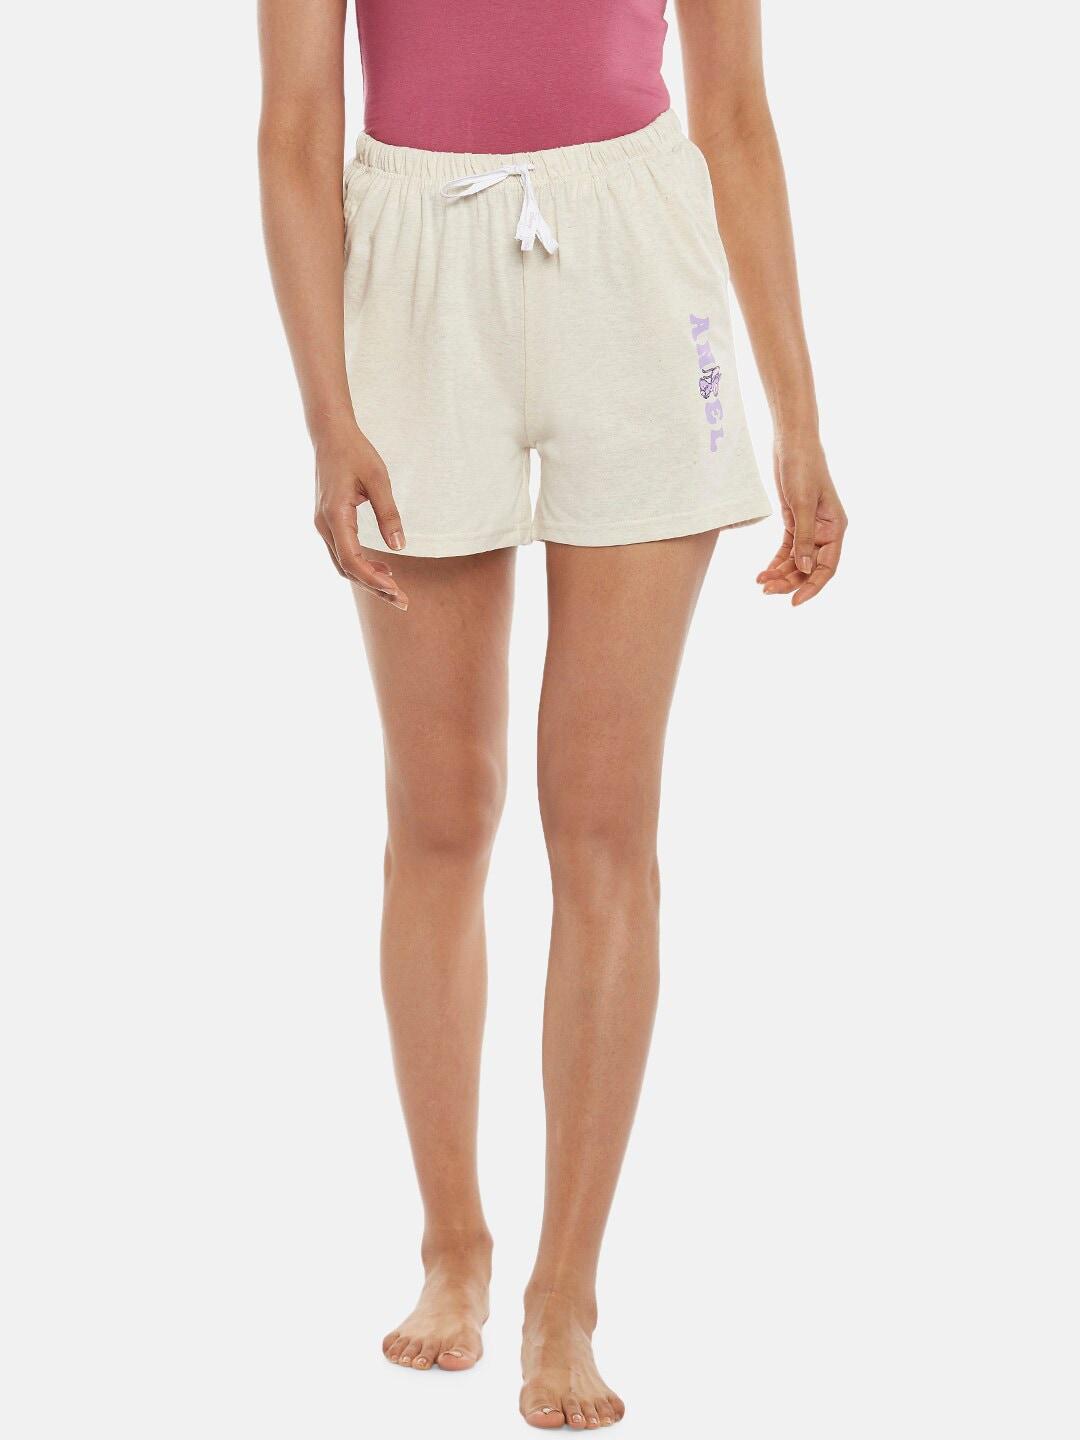 dreamz-by-pantaloons-women-mid-rise-cotton-lounge-shorts